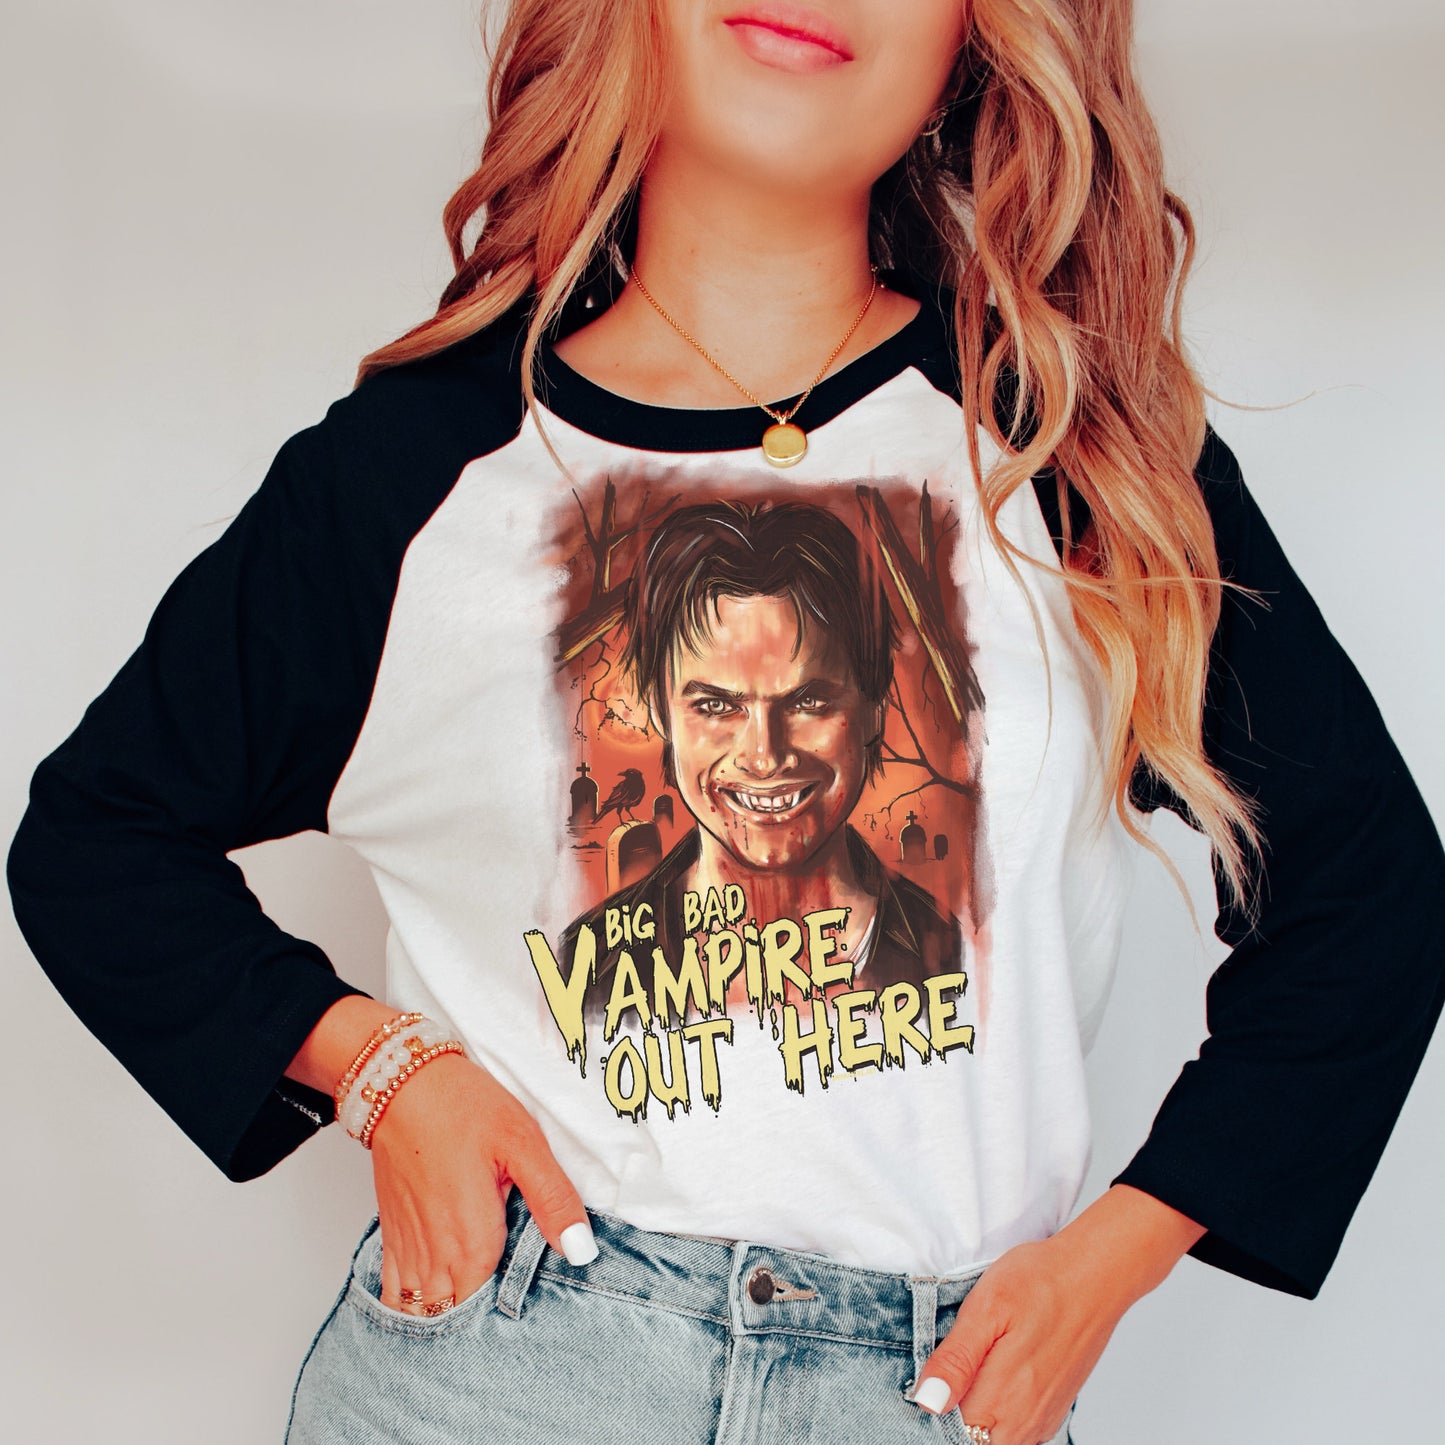 Damon Salvatore Shirt, TVD shirt, Tvd merch, tvd apparel, Salvatore brothers, Mystic Falls shirt, Damon Salvatore, Team Damon